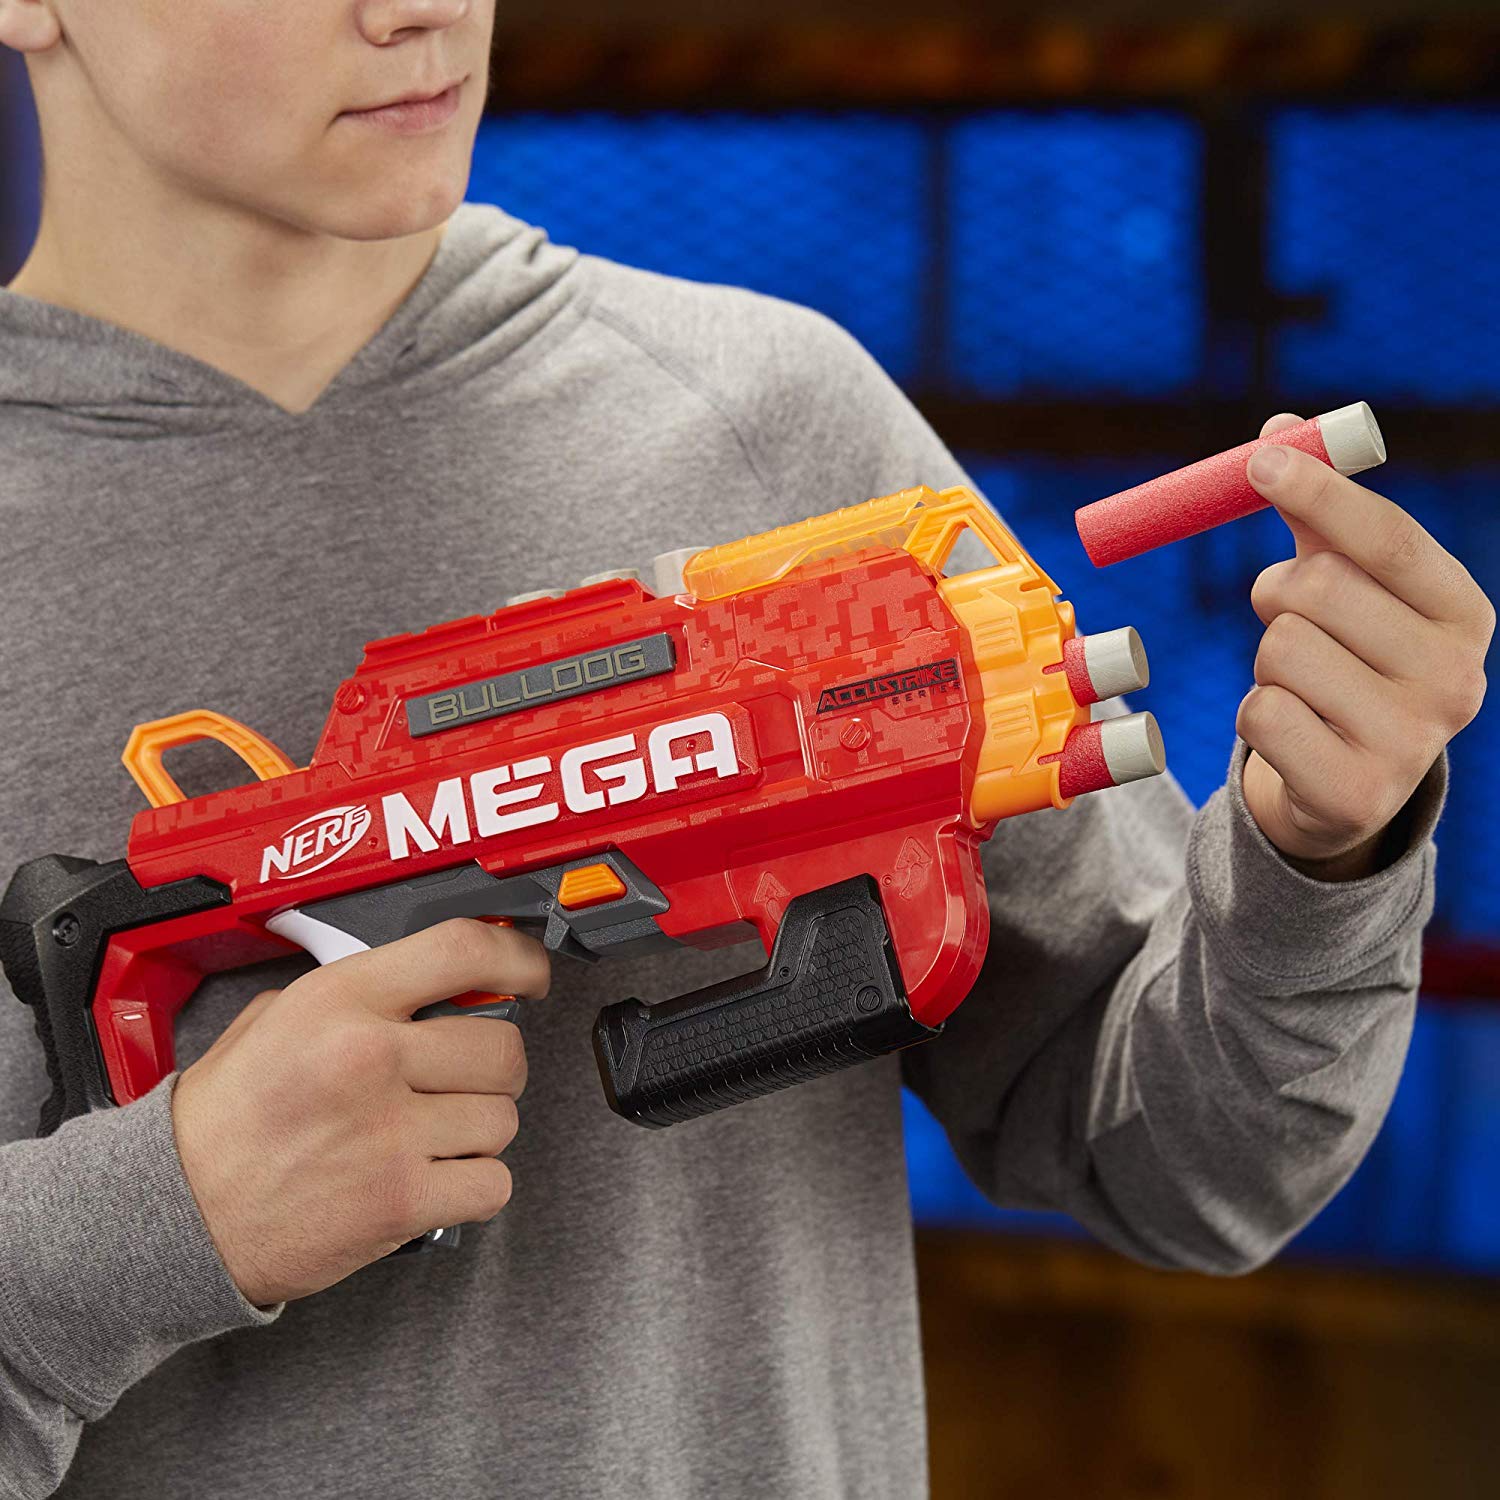 NERF Accustrike Mega Bulldog Blaster Hasbro BRAND 2 Modes for sale online 